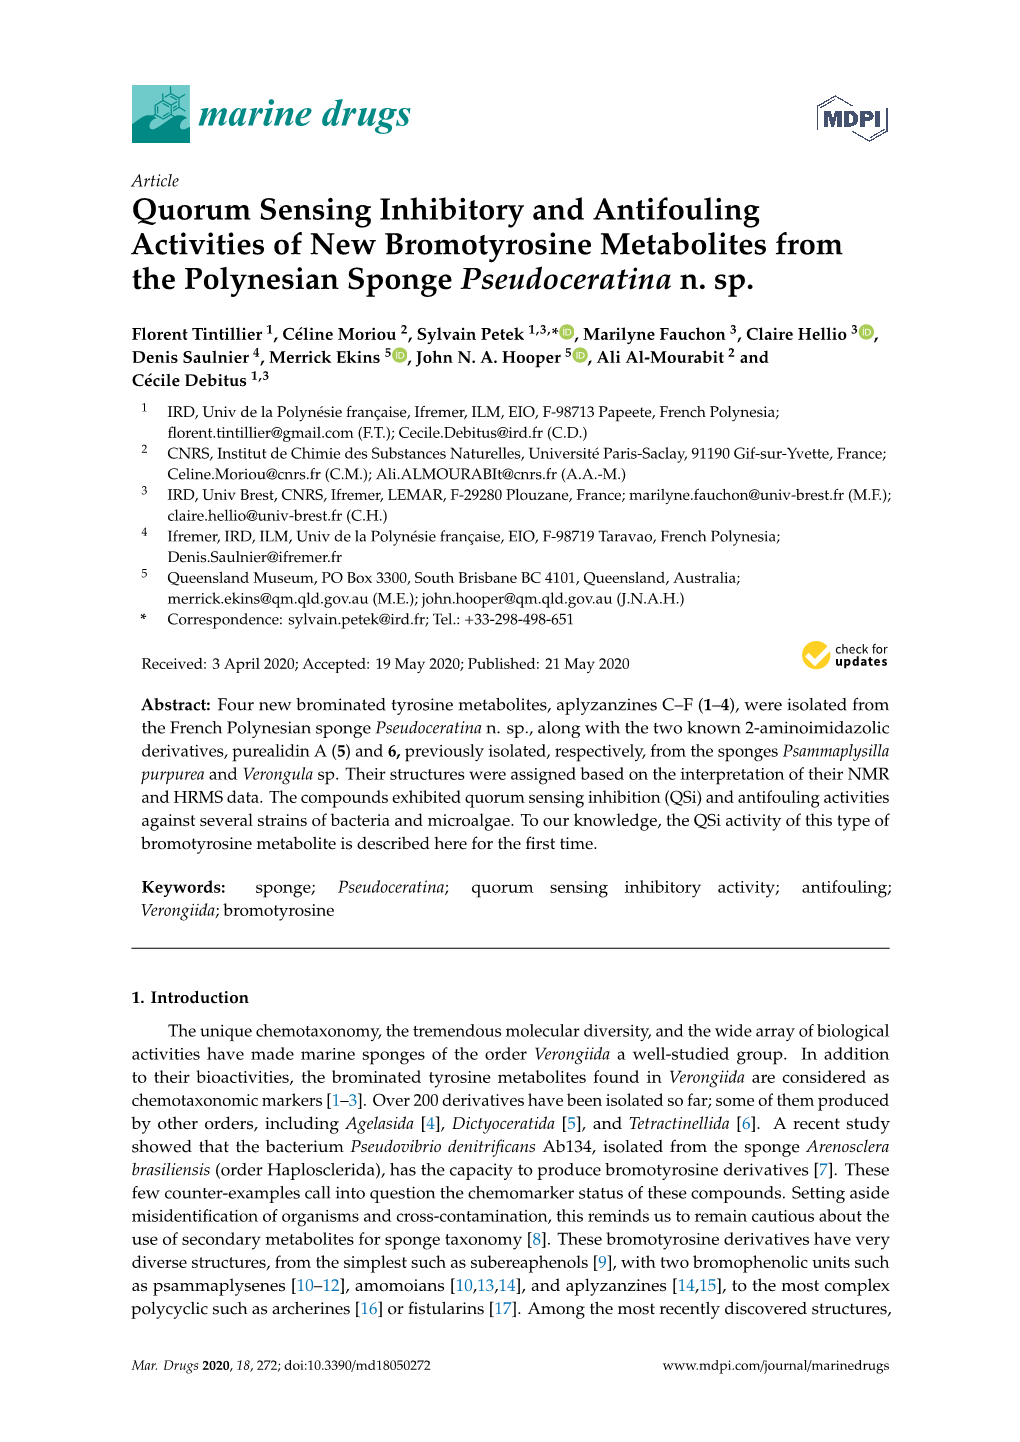 Quorum Sensing Inhibitory and Antifouling Activities of New Bromotyrosine Metabolites from the Polynesian Sponge Pseudoceratina N